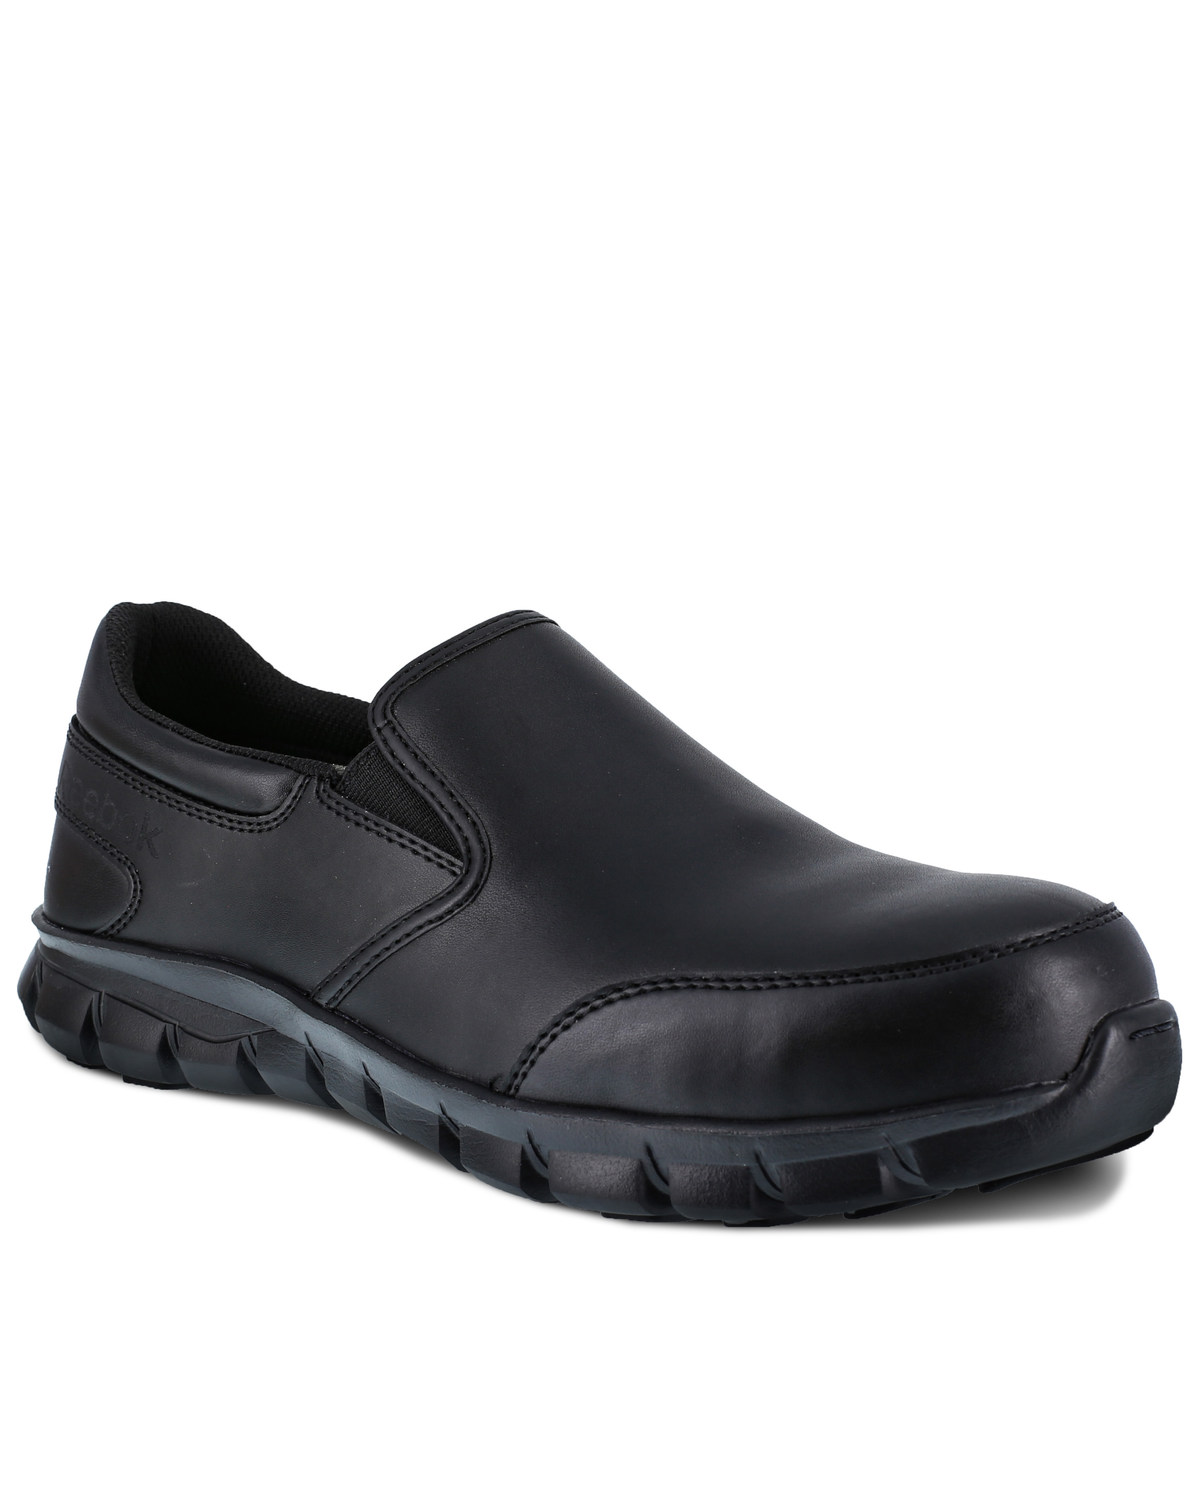 Reebok Men's Slip-On Sublite Work Shoes - Composite Toe